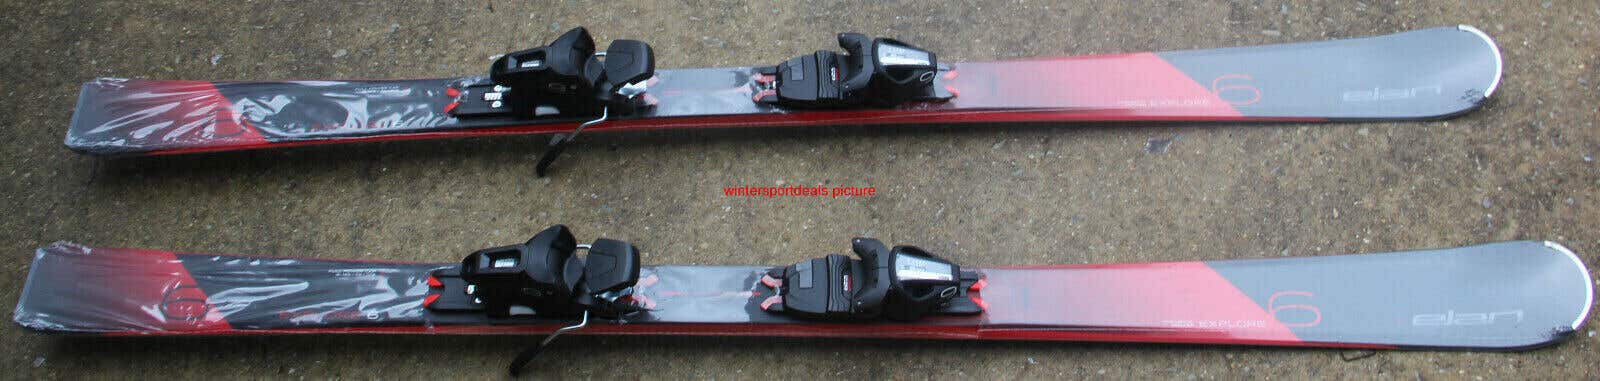 NEW Elan Explore 6 LS Ski's with EL 9.0 Bindings - Red, Black 152 cm